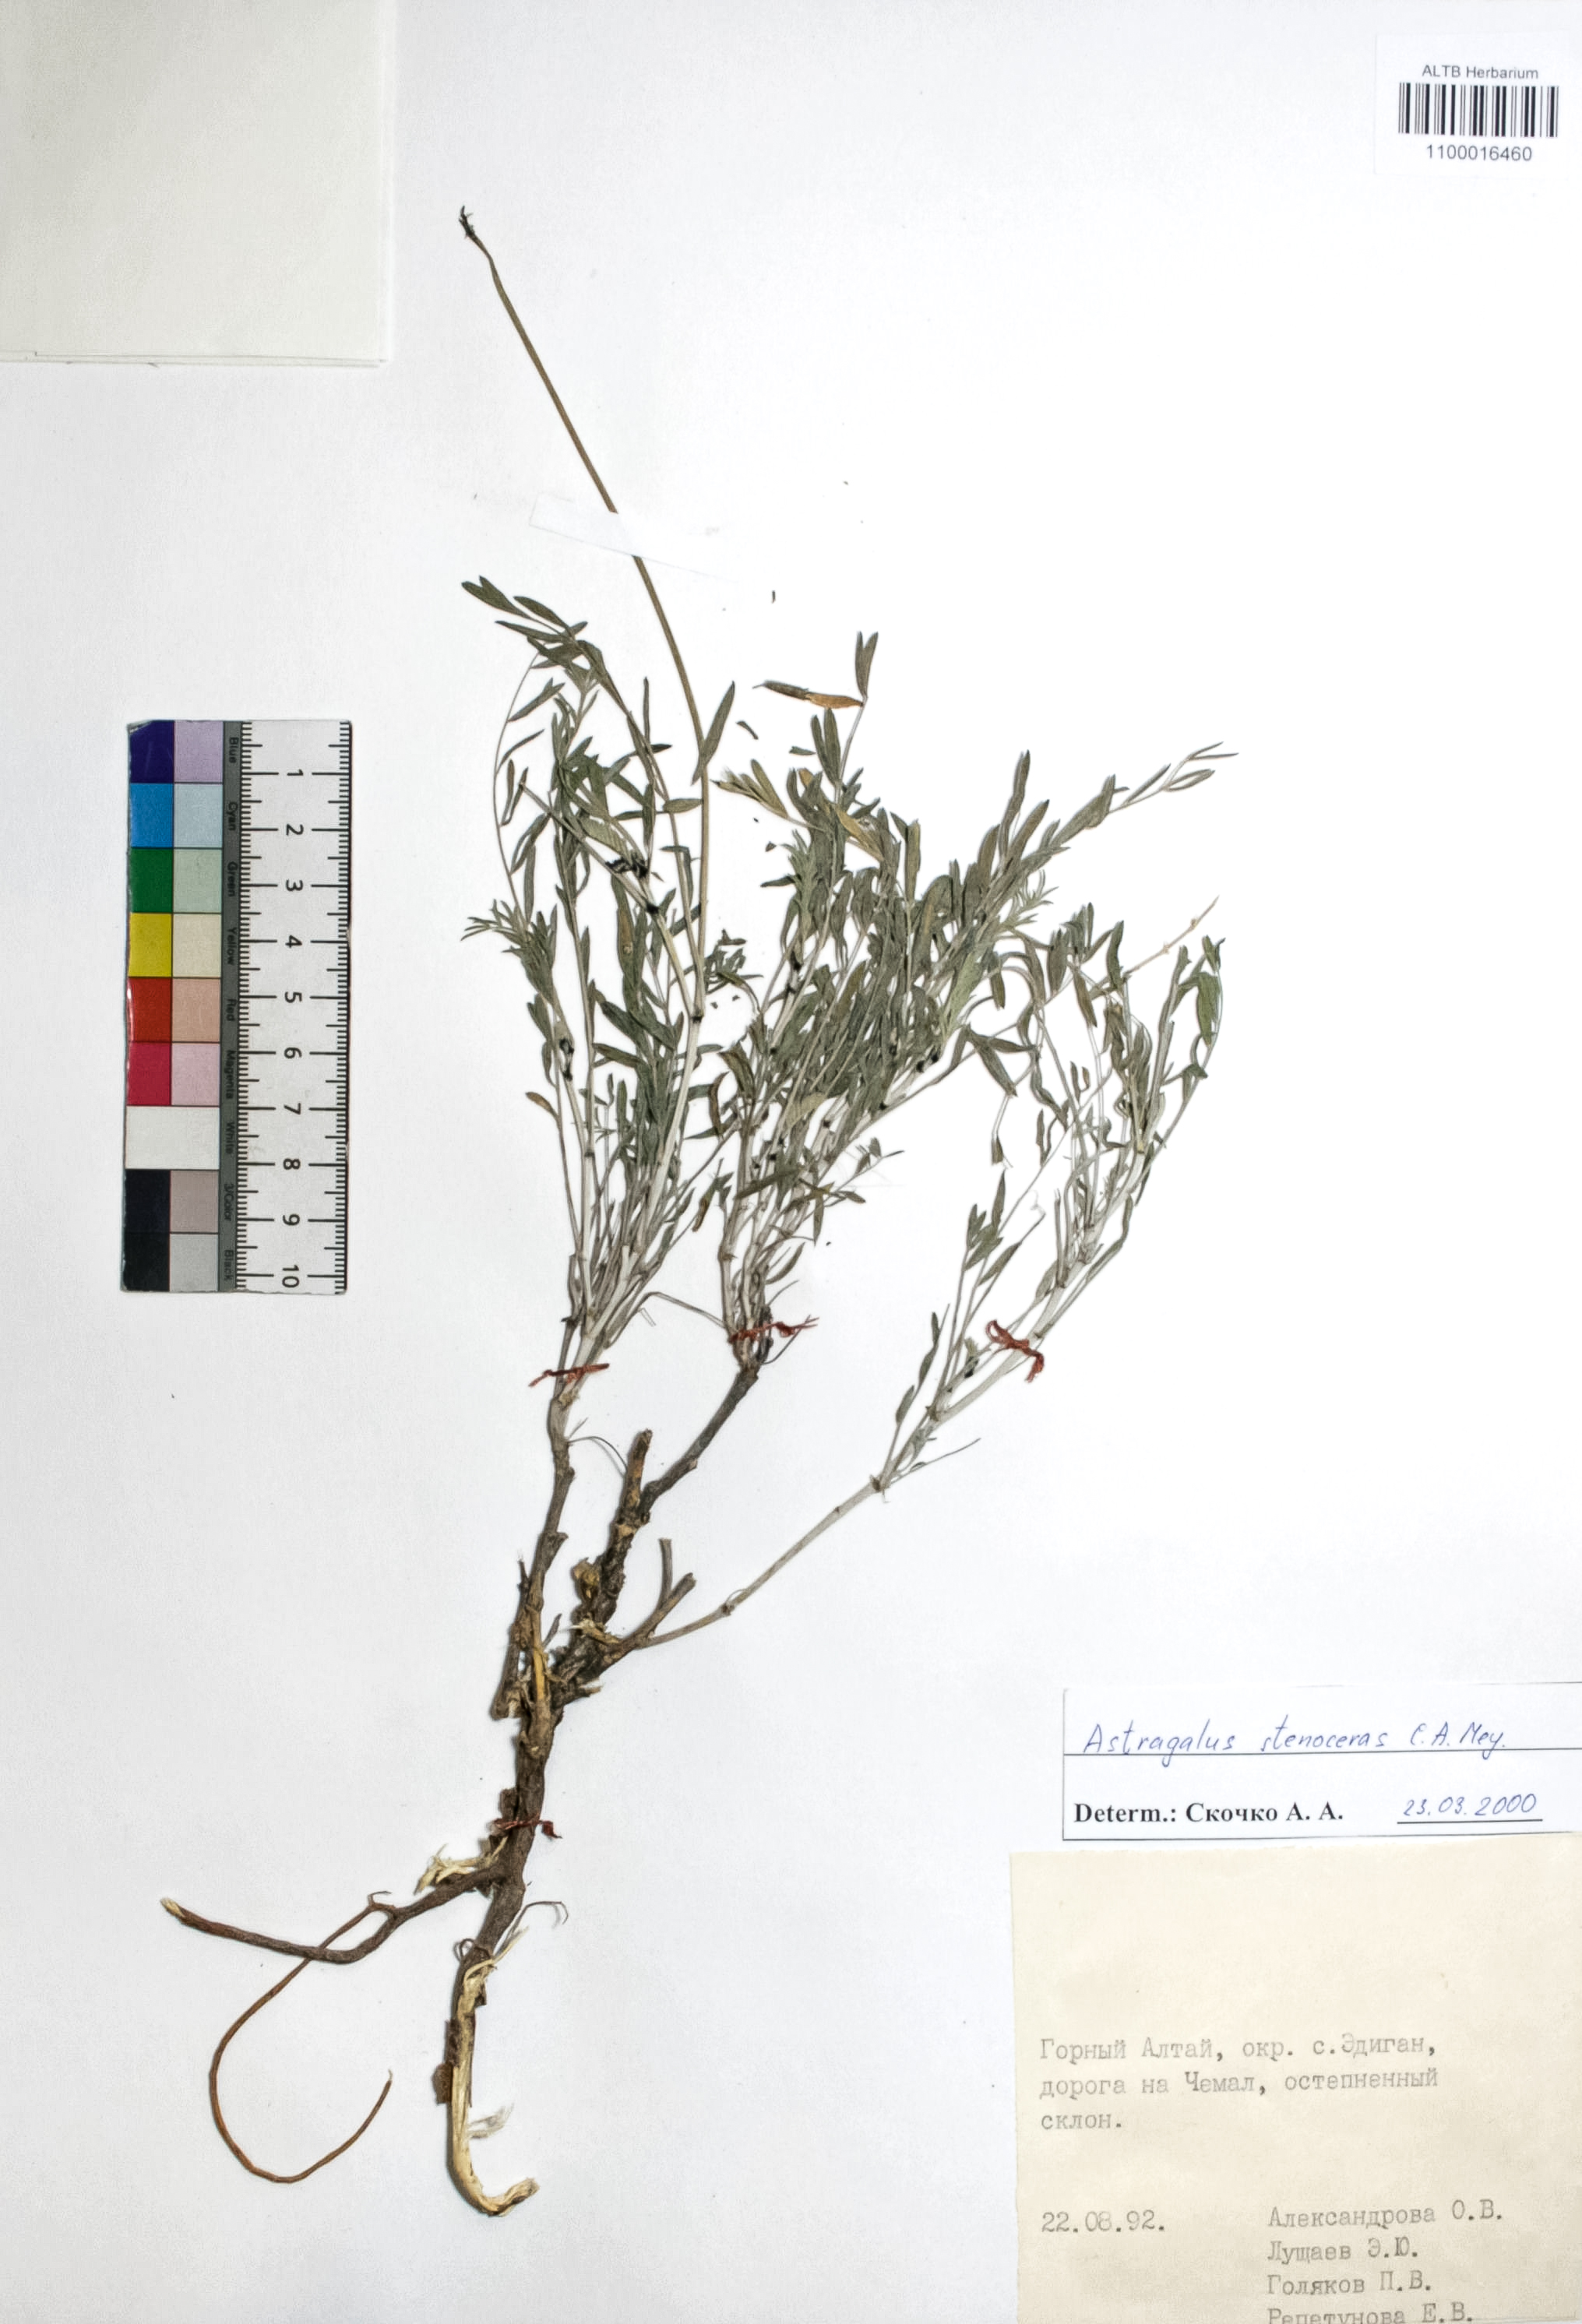 Astragalus stenoceras C. A. Mey.